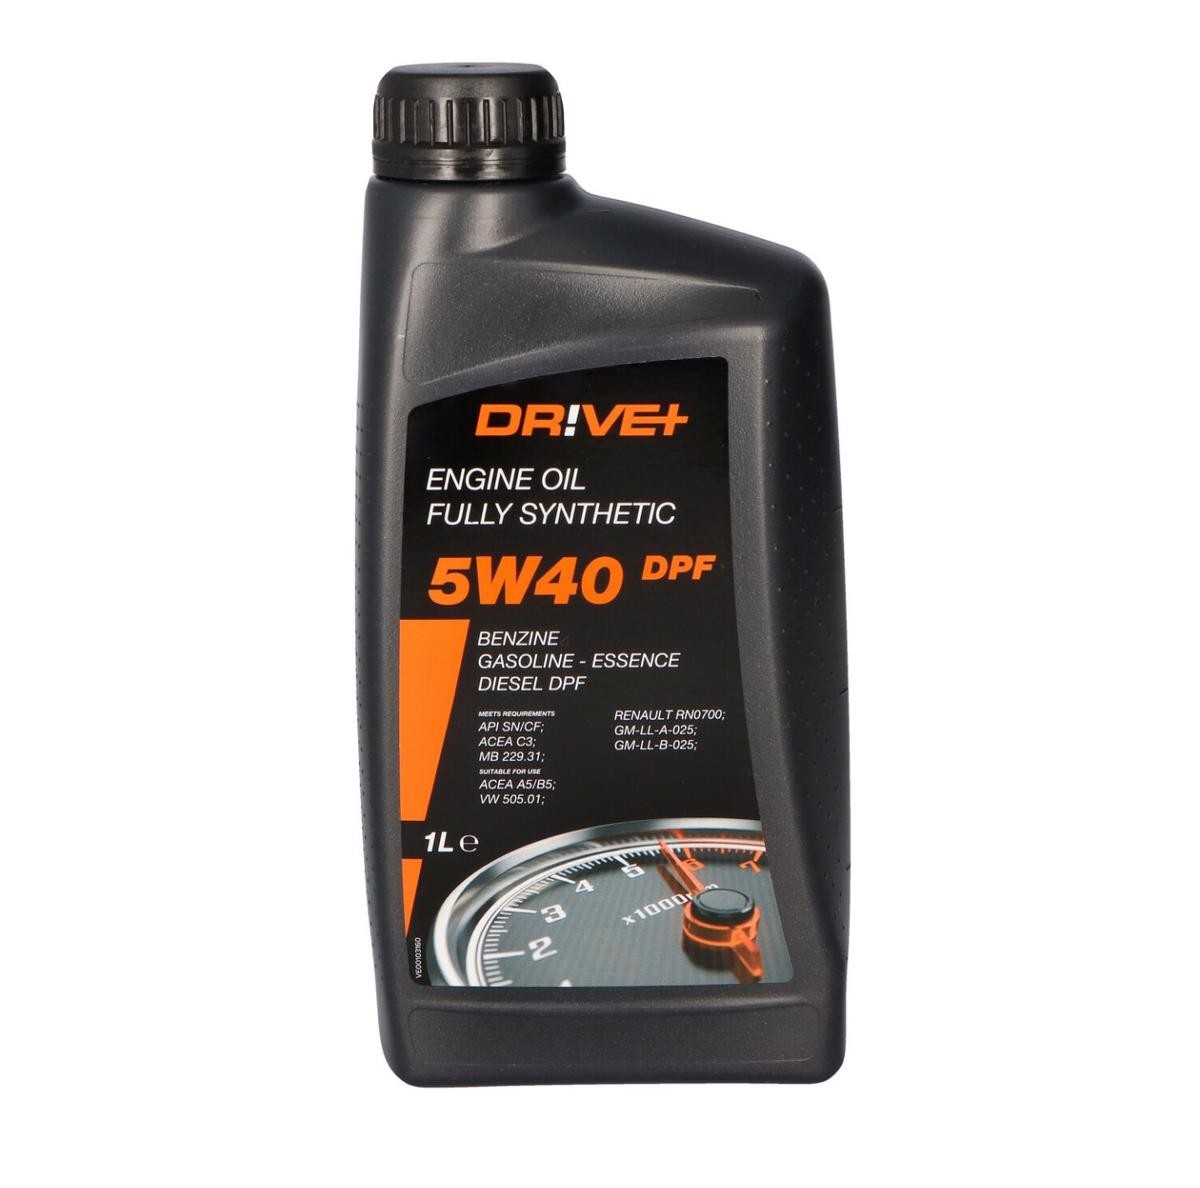 Dr!ve+ DPF 5W-40, 1l Motor oil DP3310.10.190 buy